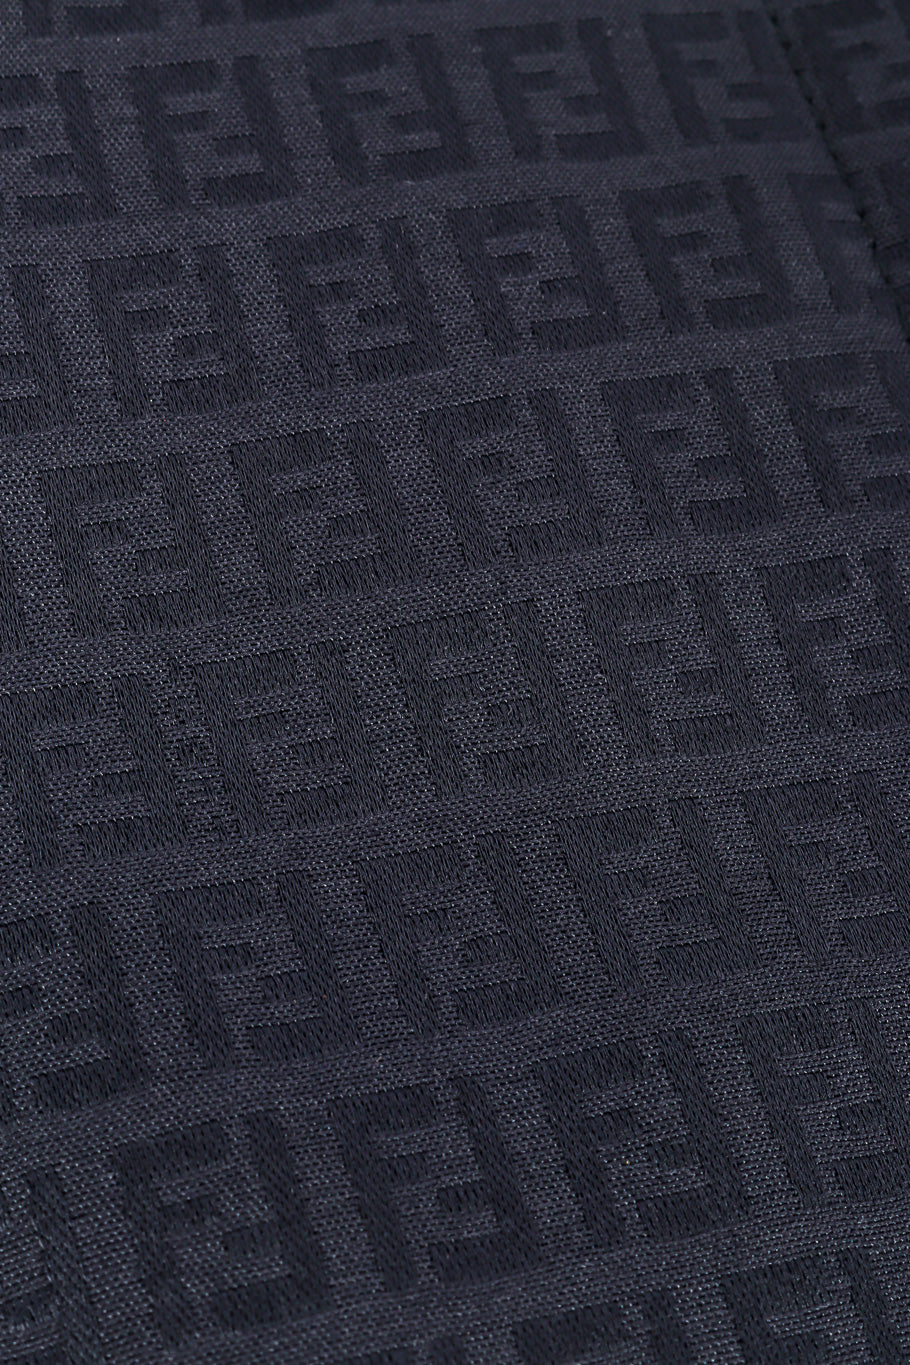 Fendi zucca monogram trench coat fabric detail @recessla